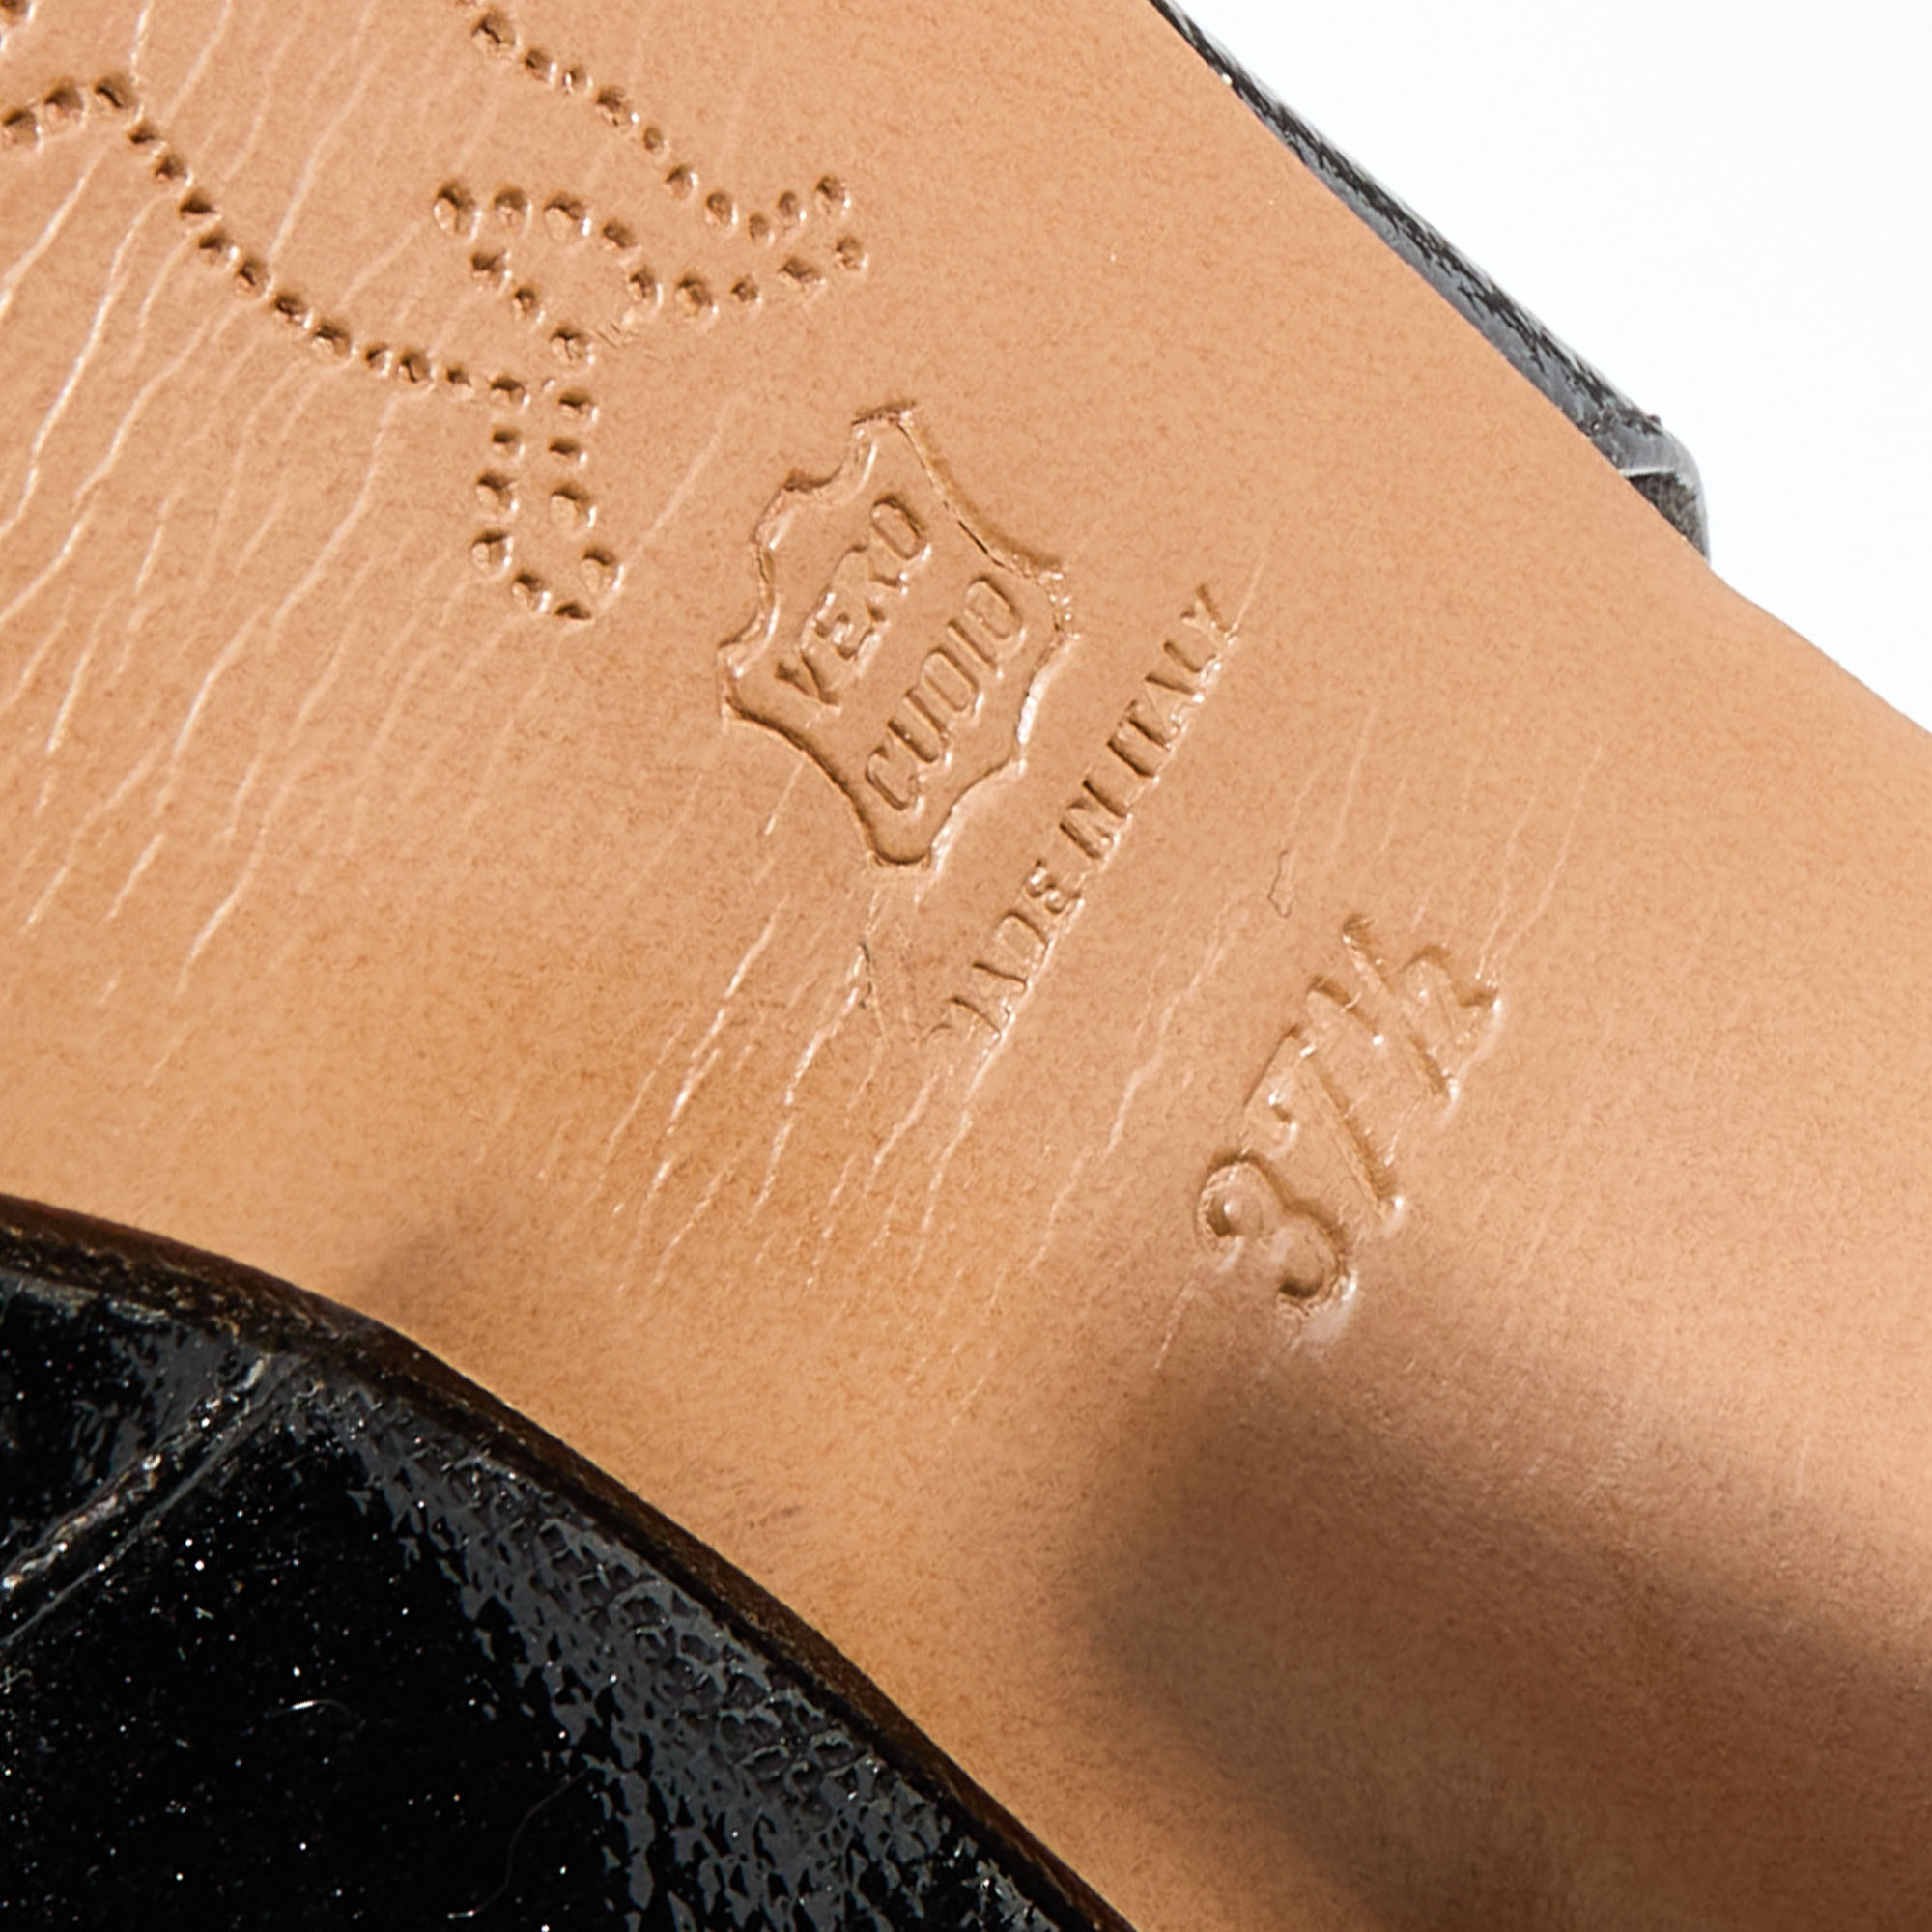 Marni Black Patent Leather Slingback Platform Sandals Size 37.5